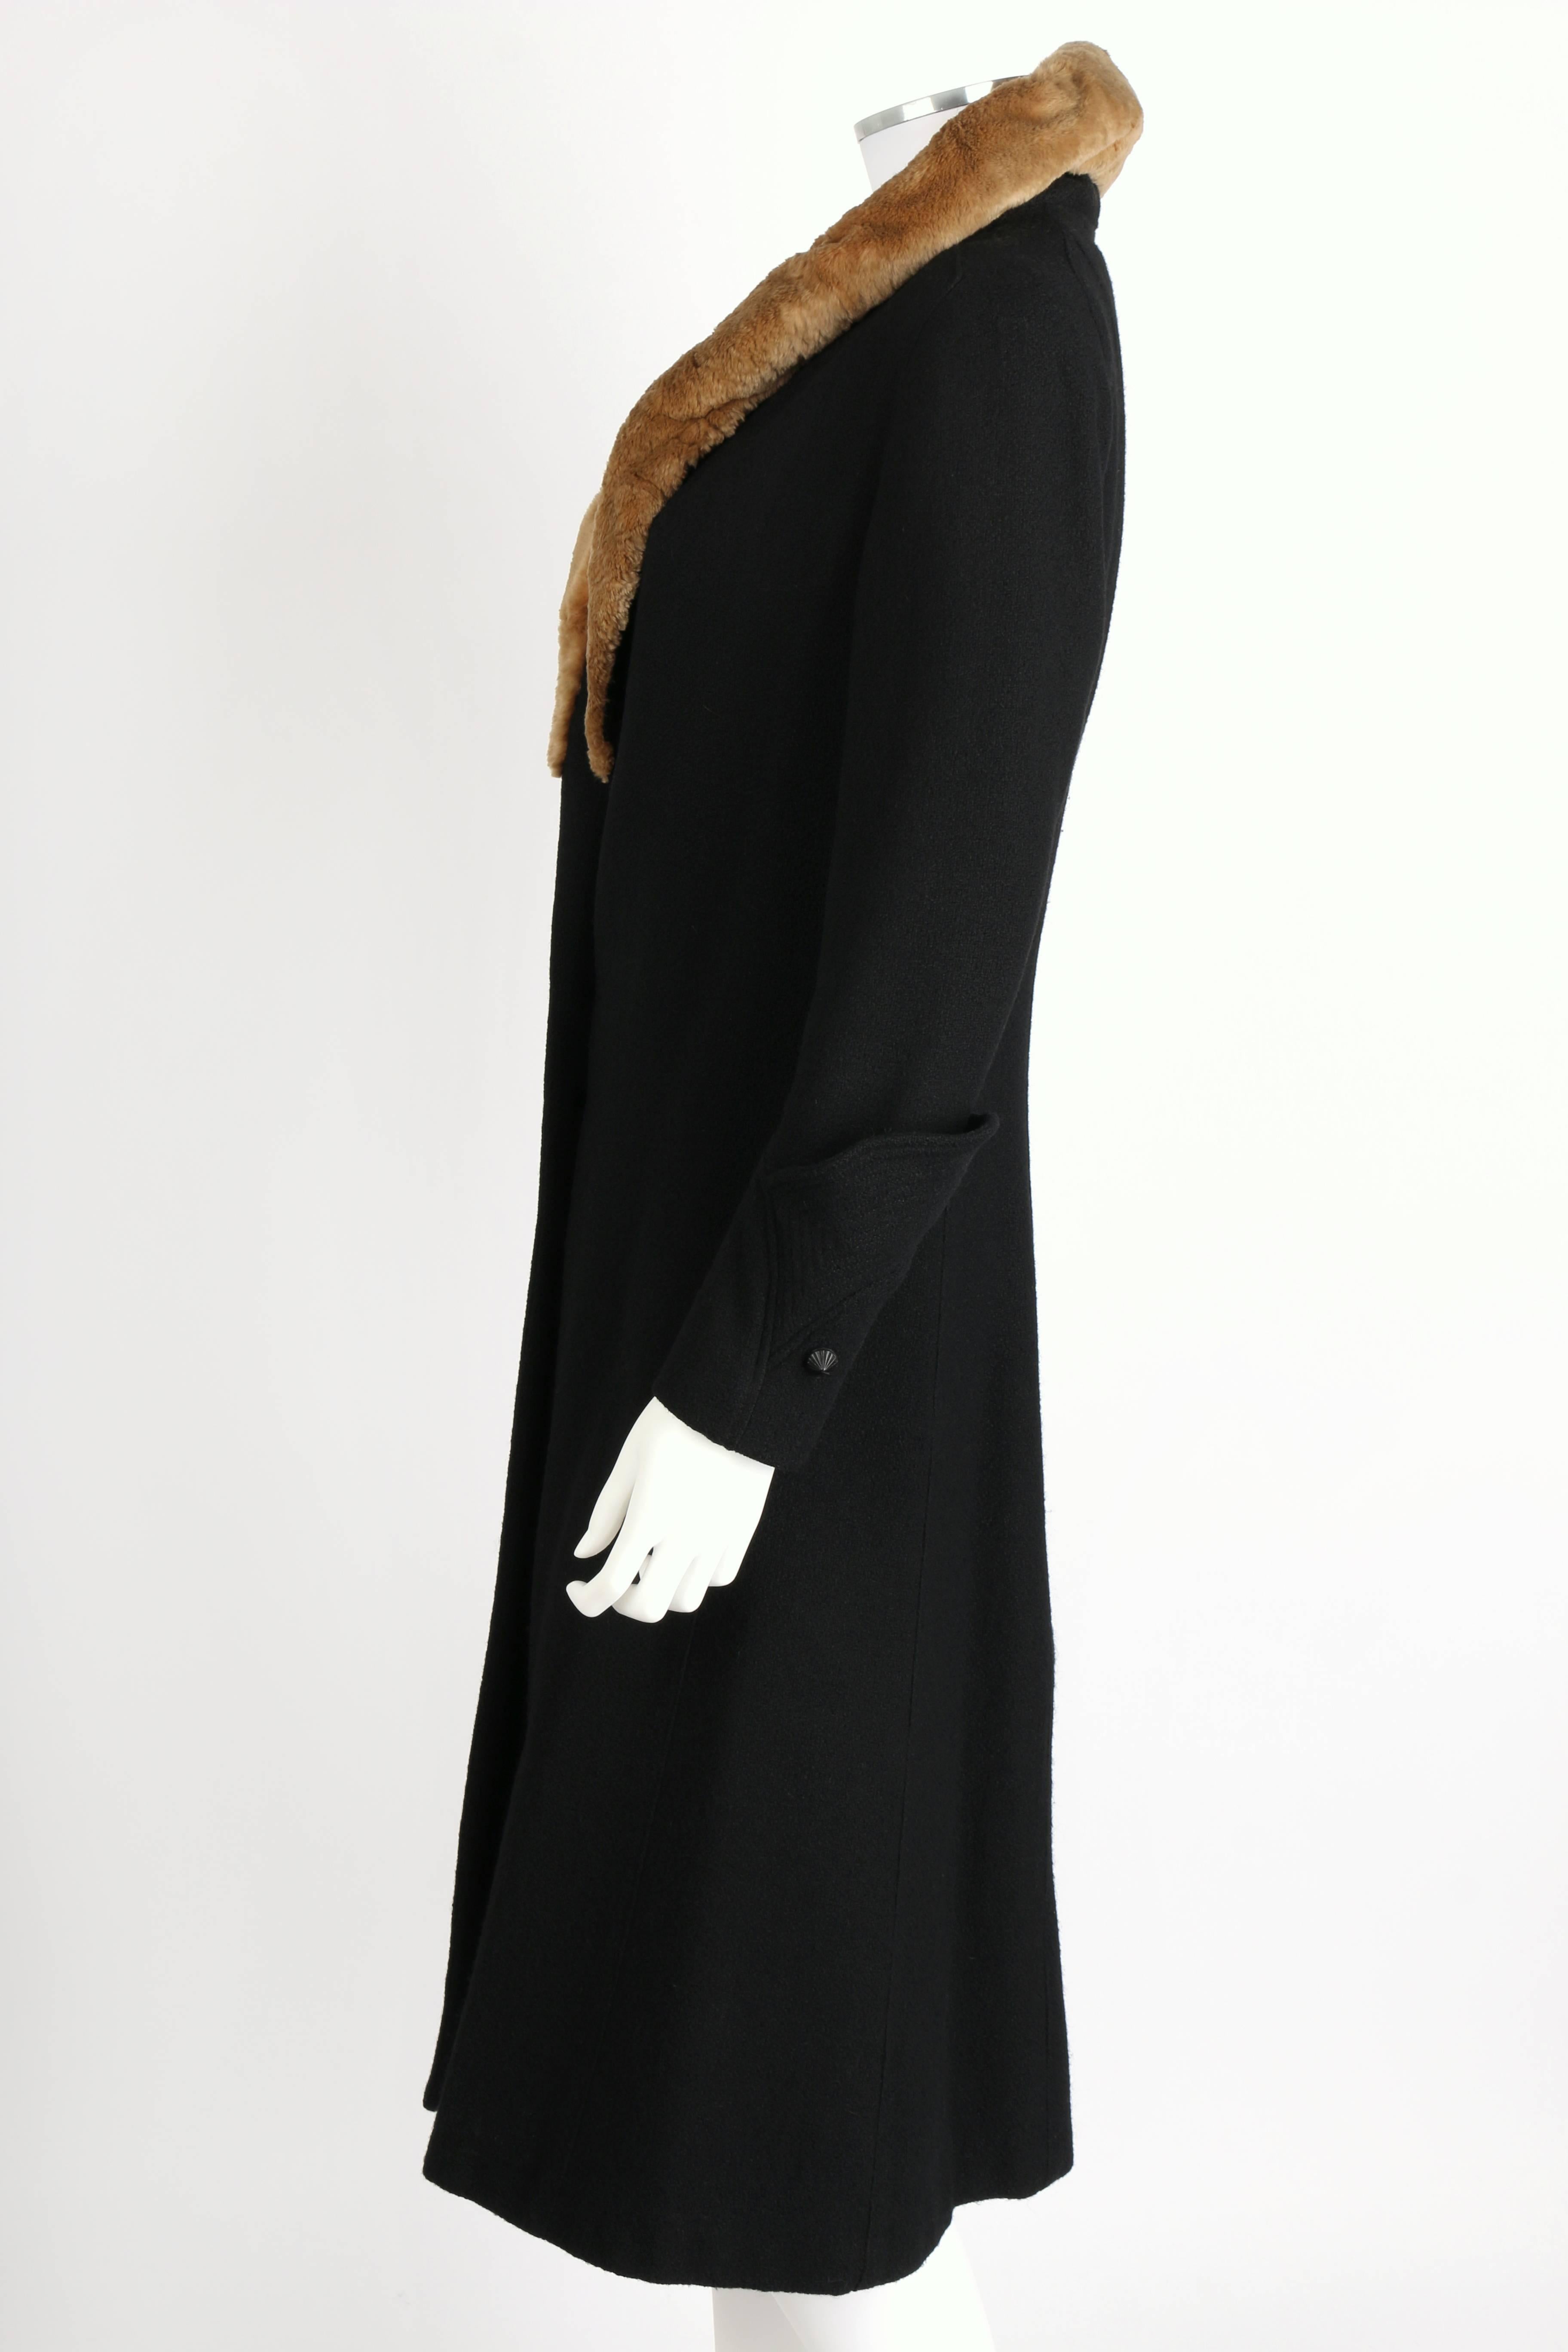 MILLER c.1910s Edwardian Black Wool Sheared Beaver Fur Art Deco Embroidered Coat 1